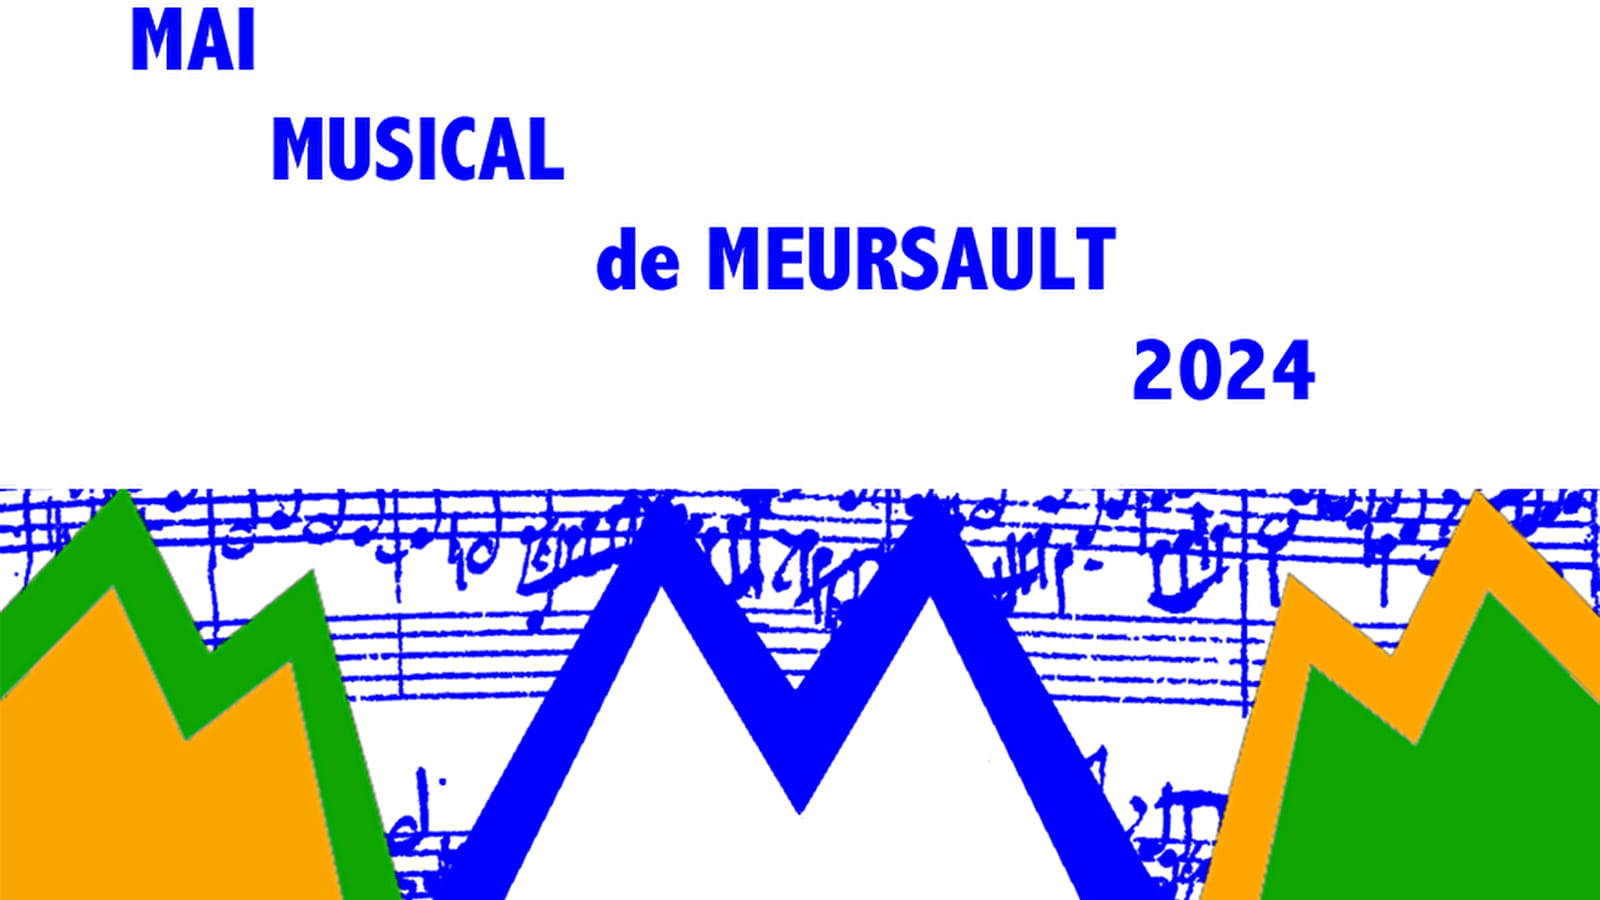 Der musikalische Mai in Meursault